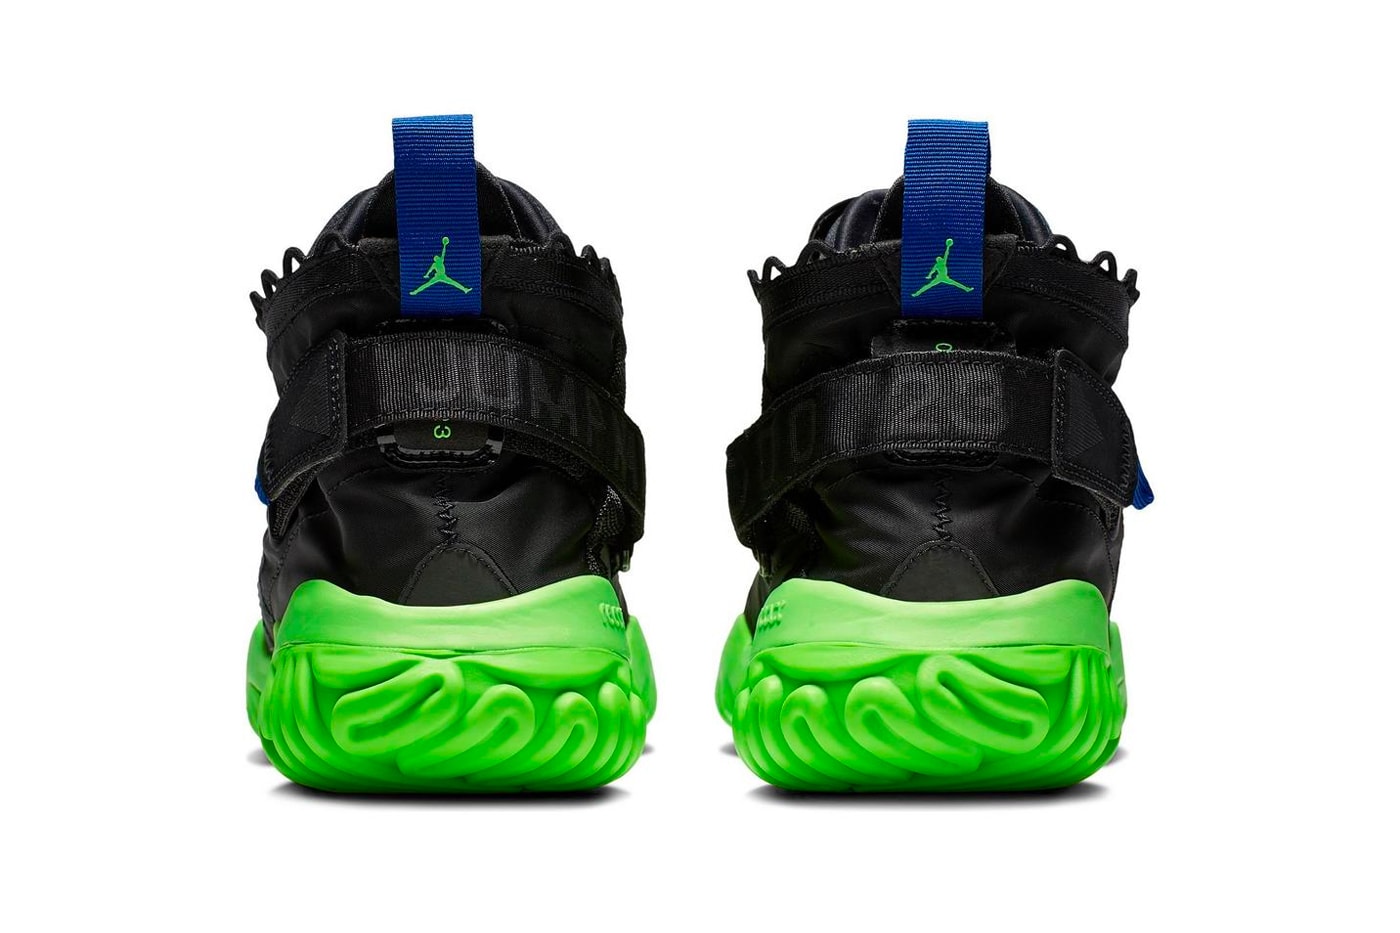 Jordan Brand Proto-React "Black/Green" Volt 